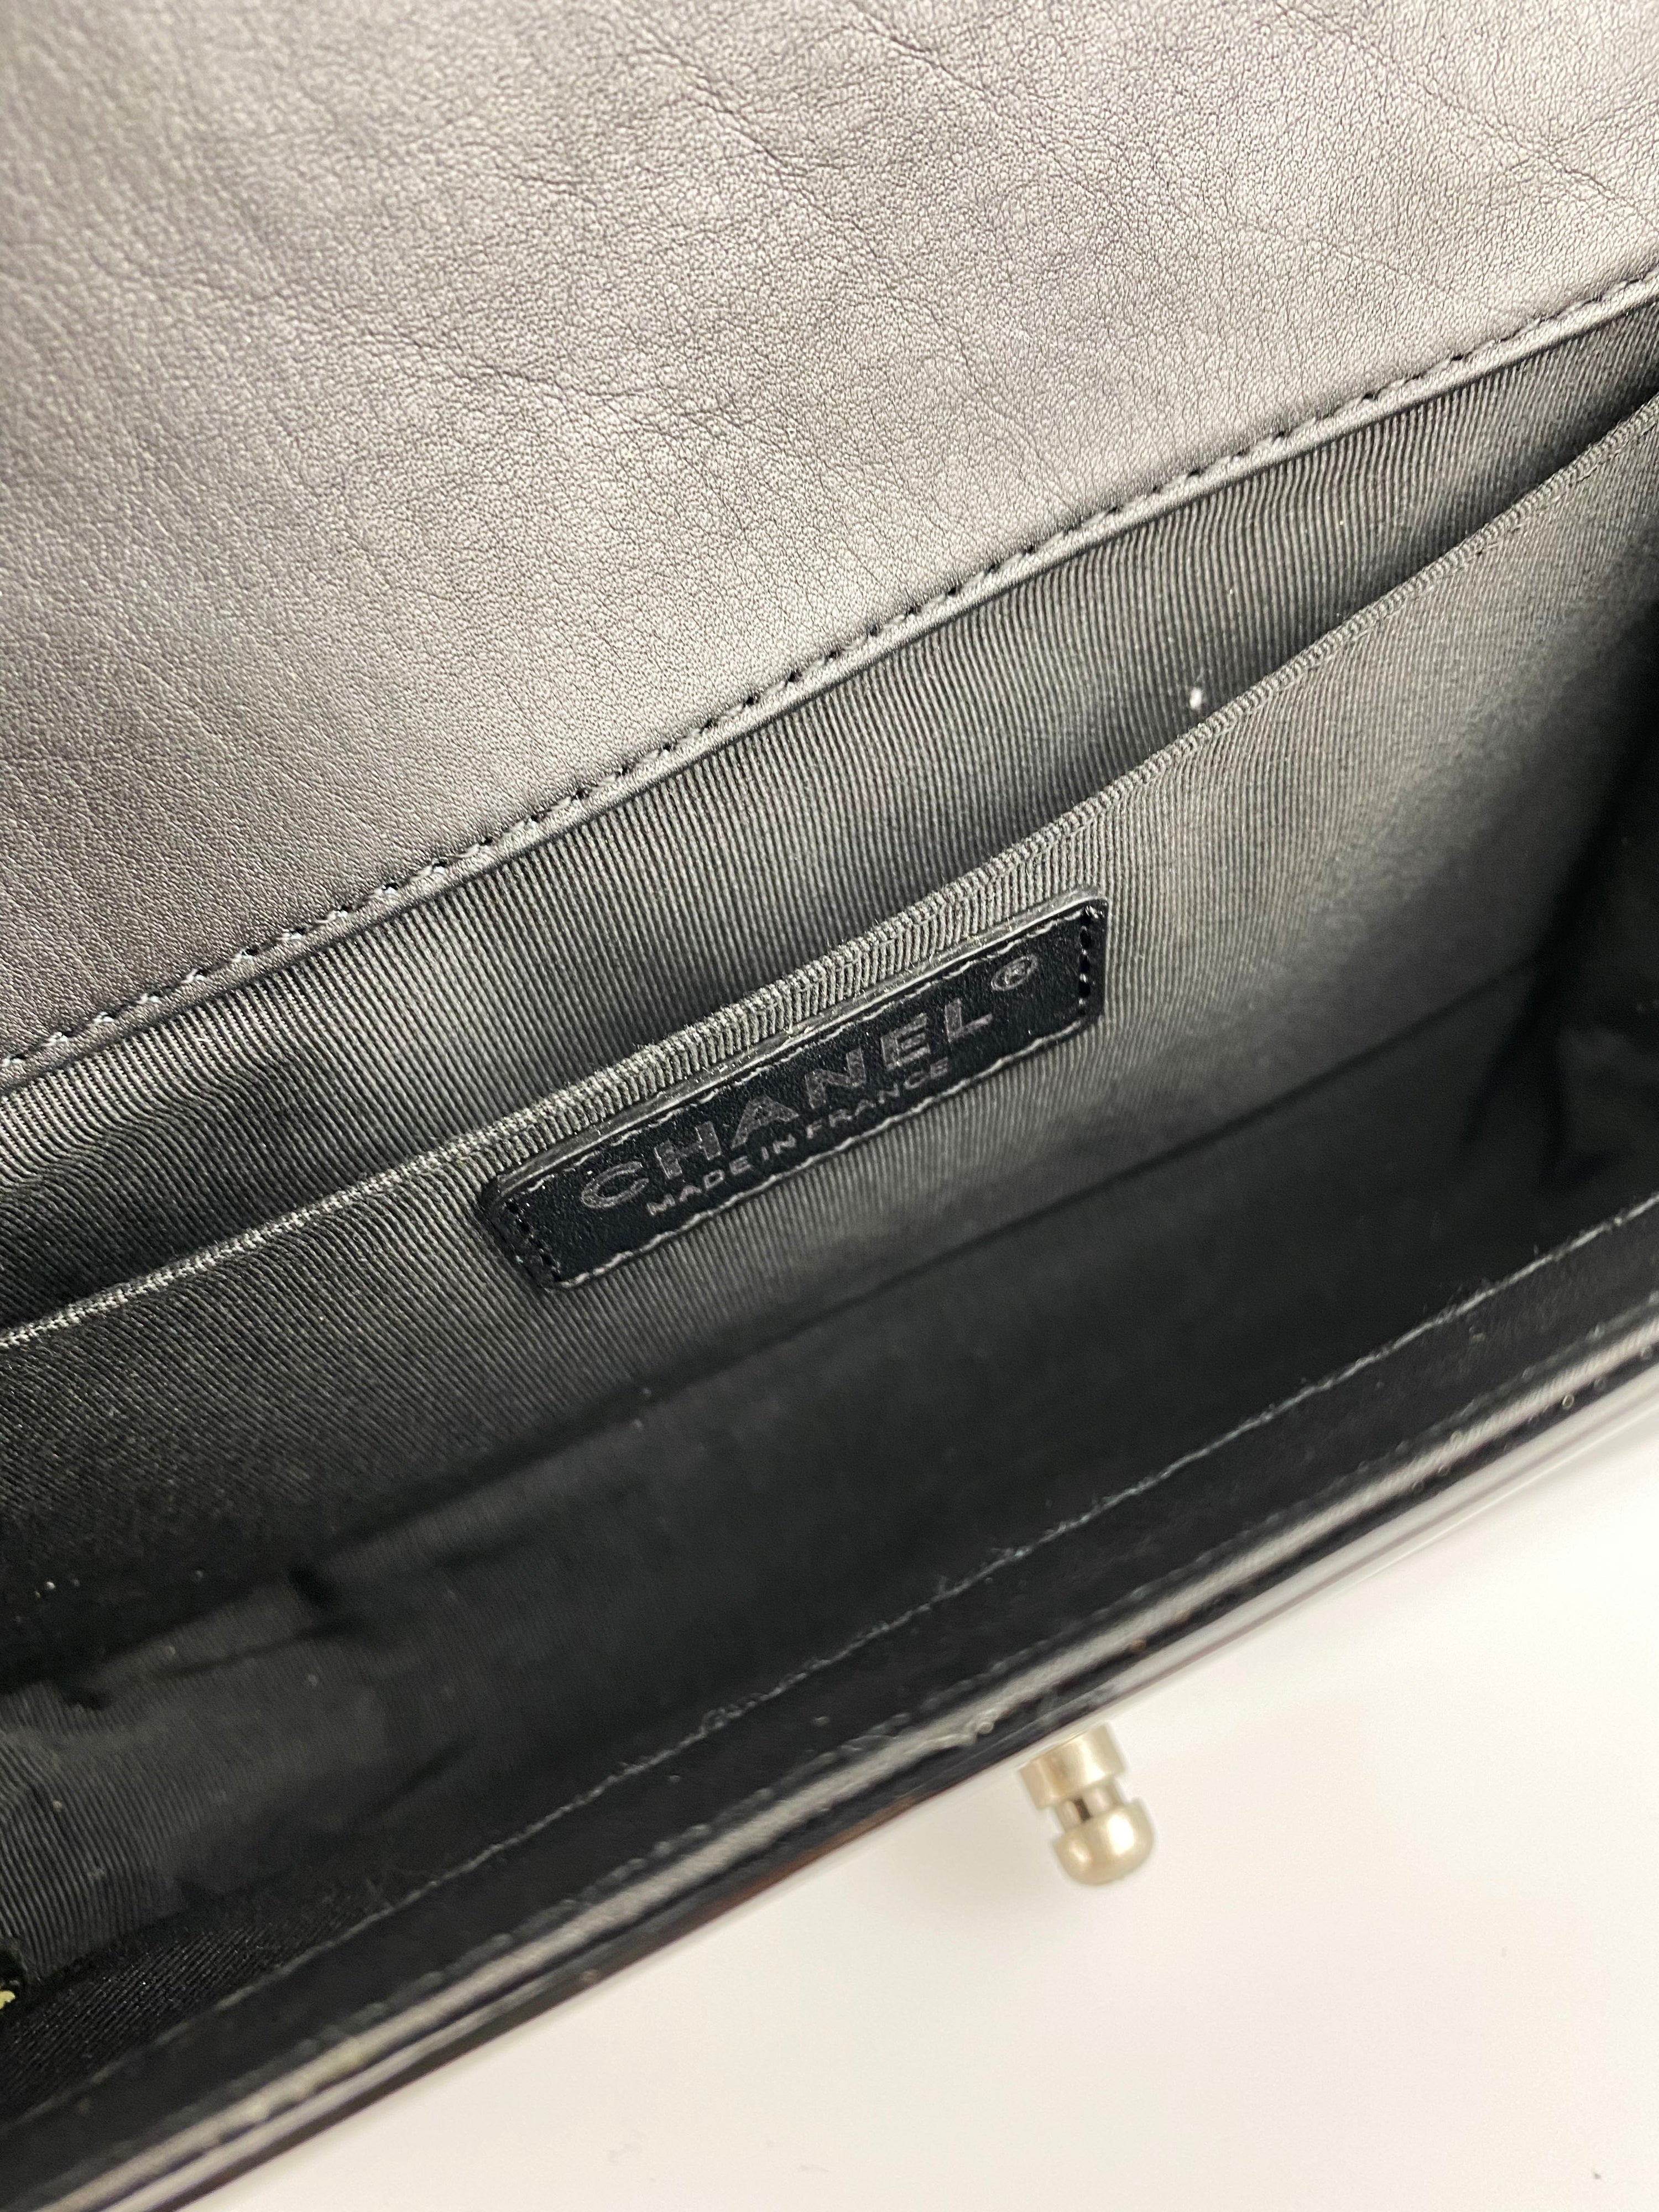 Chanel Boy Black Patent Leather Bag